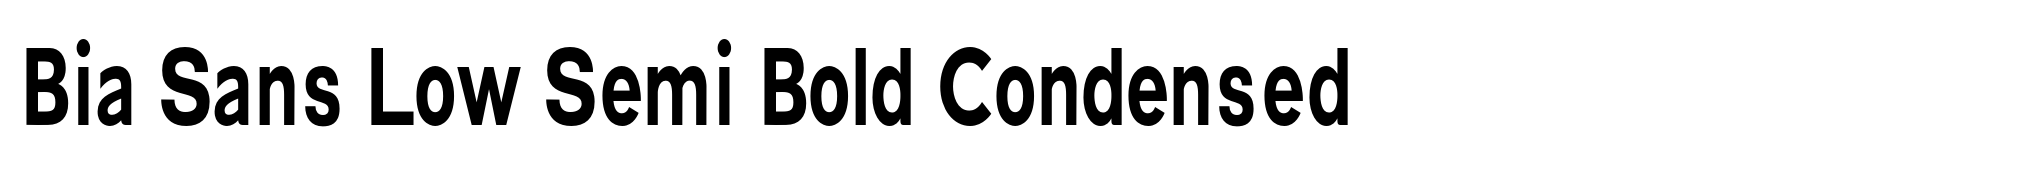 Bia Sans Low Semi Bold Condensed image